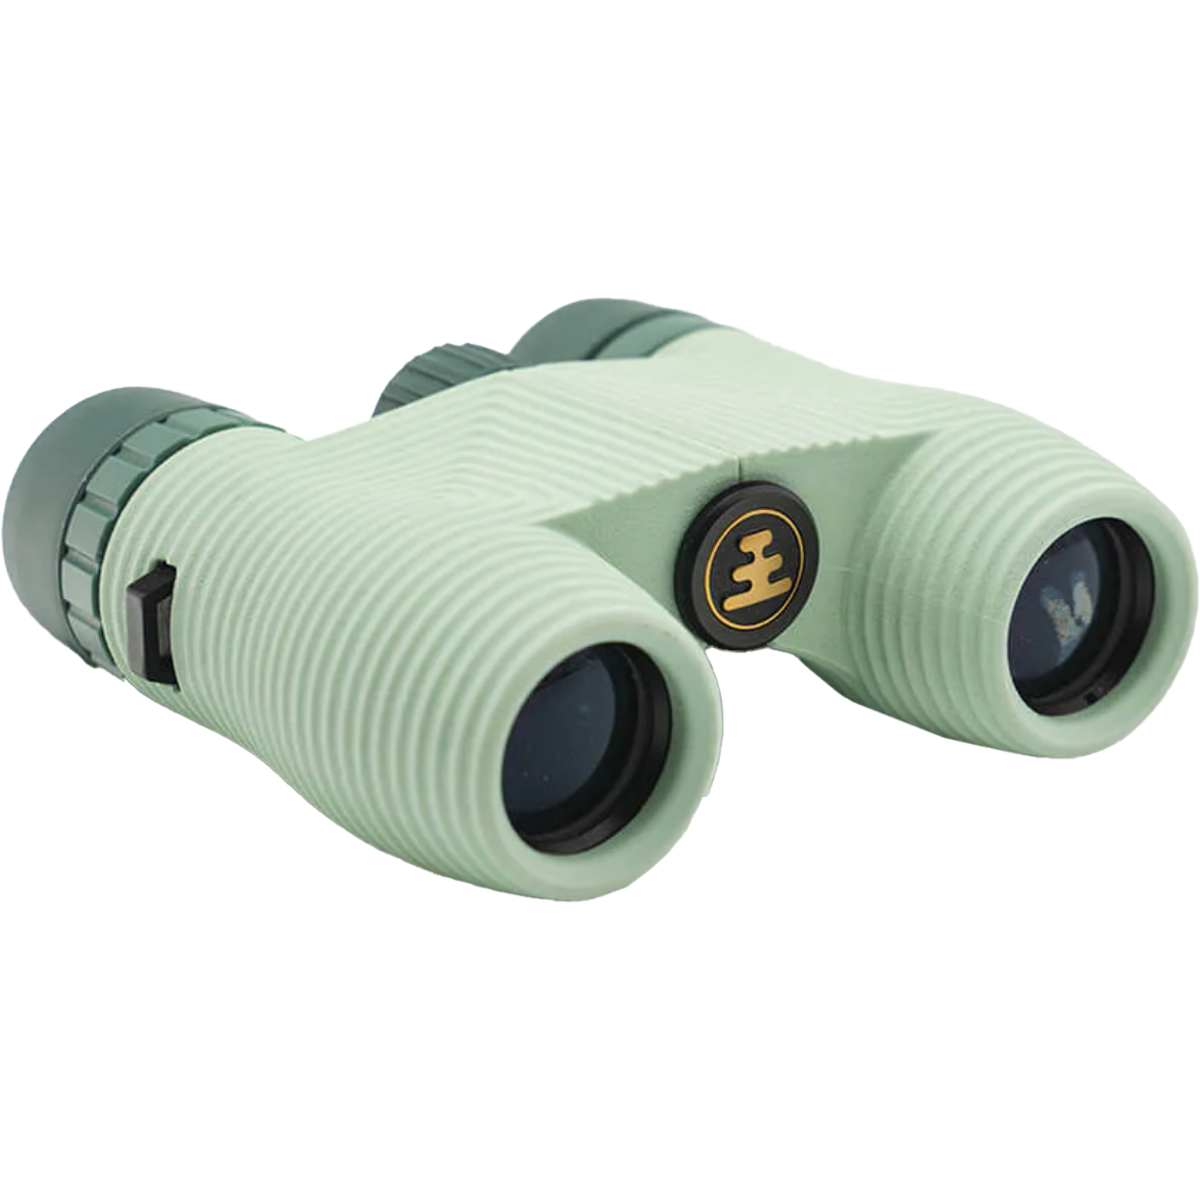 Standard Issue 8x25 Binoculars alternate view